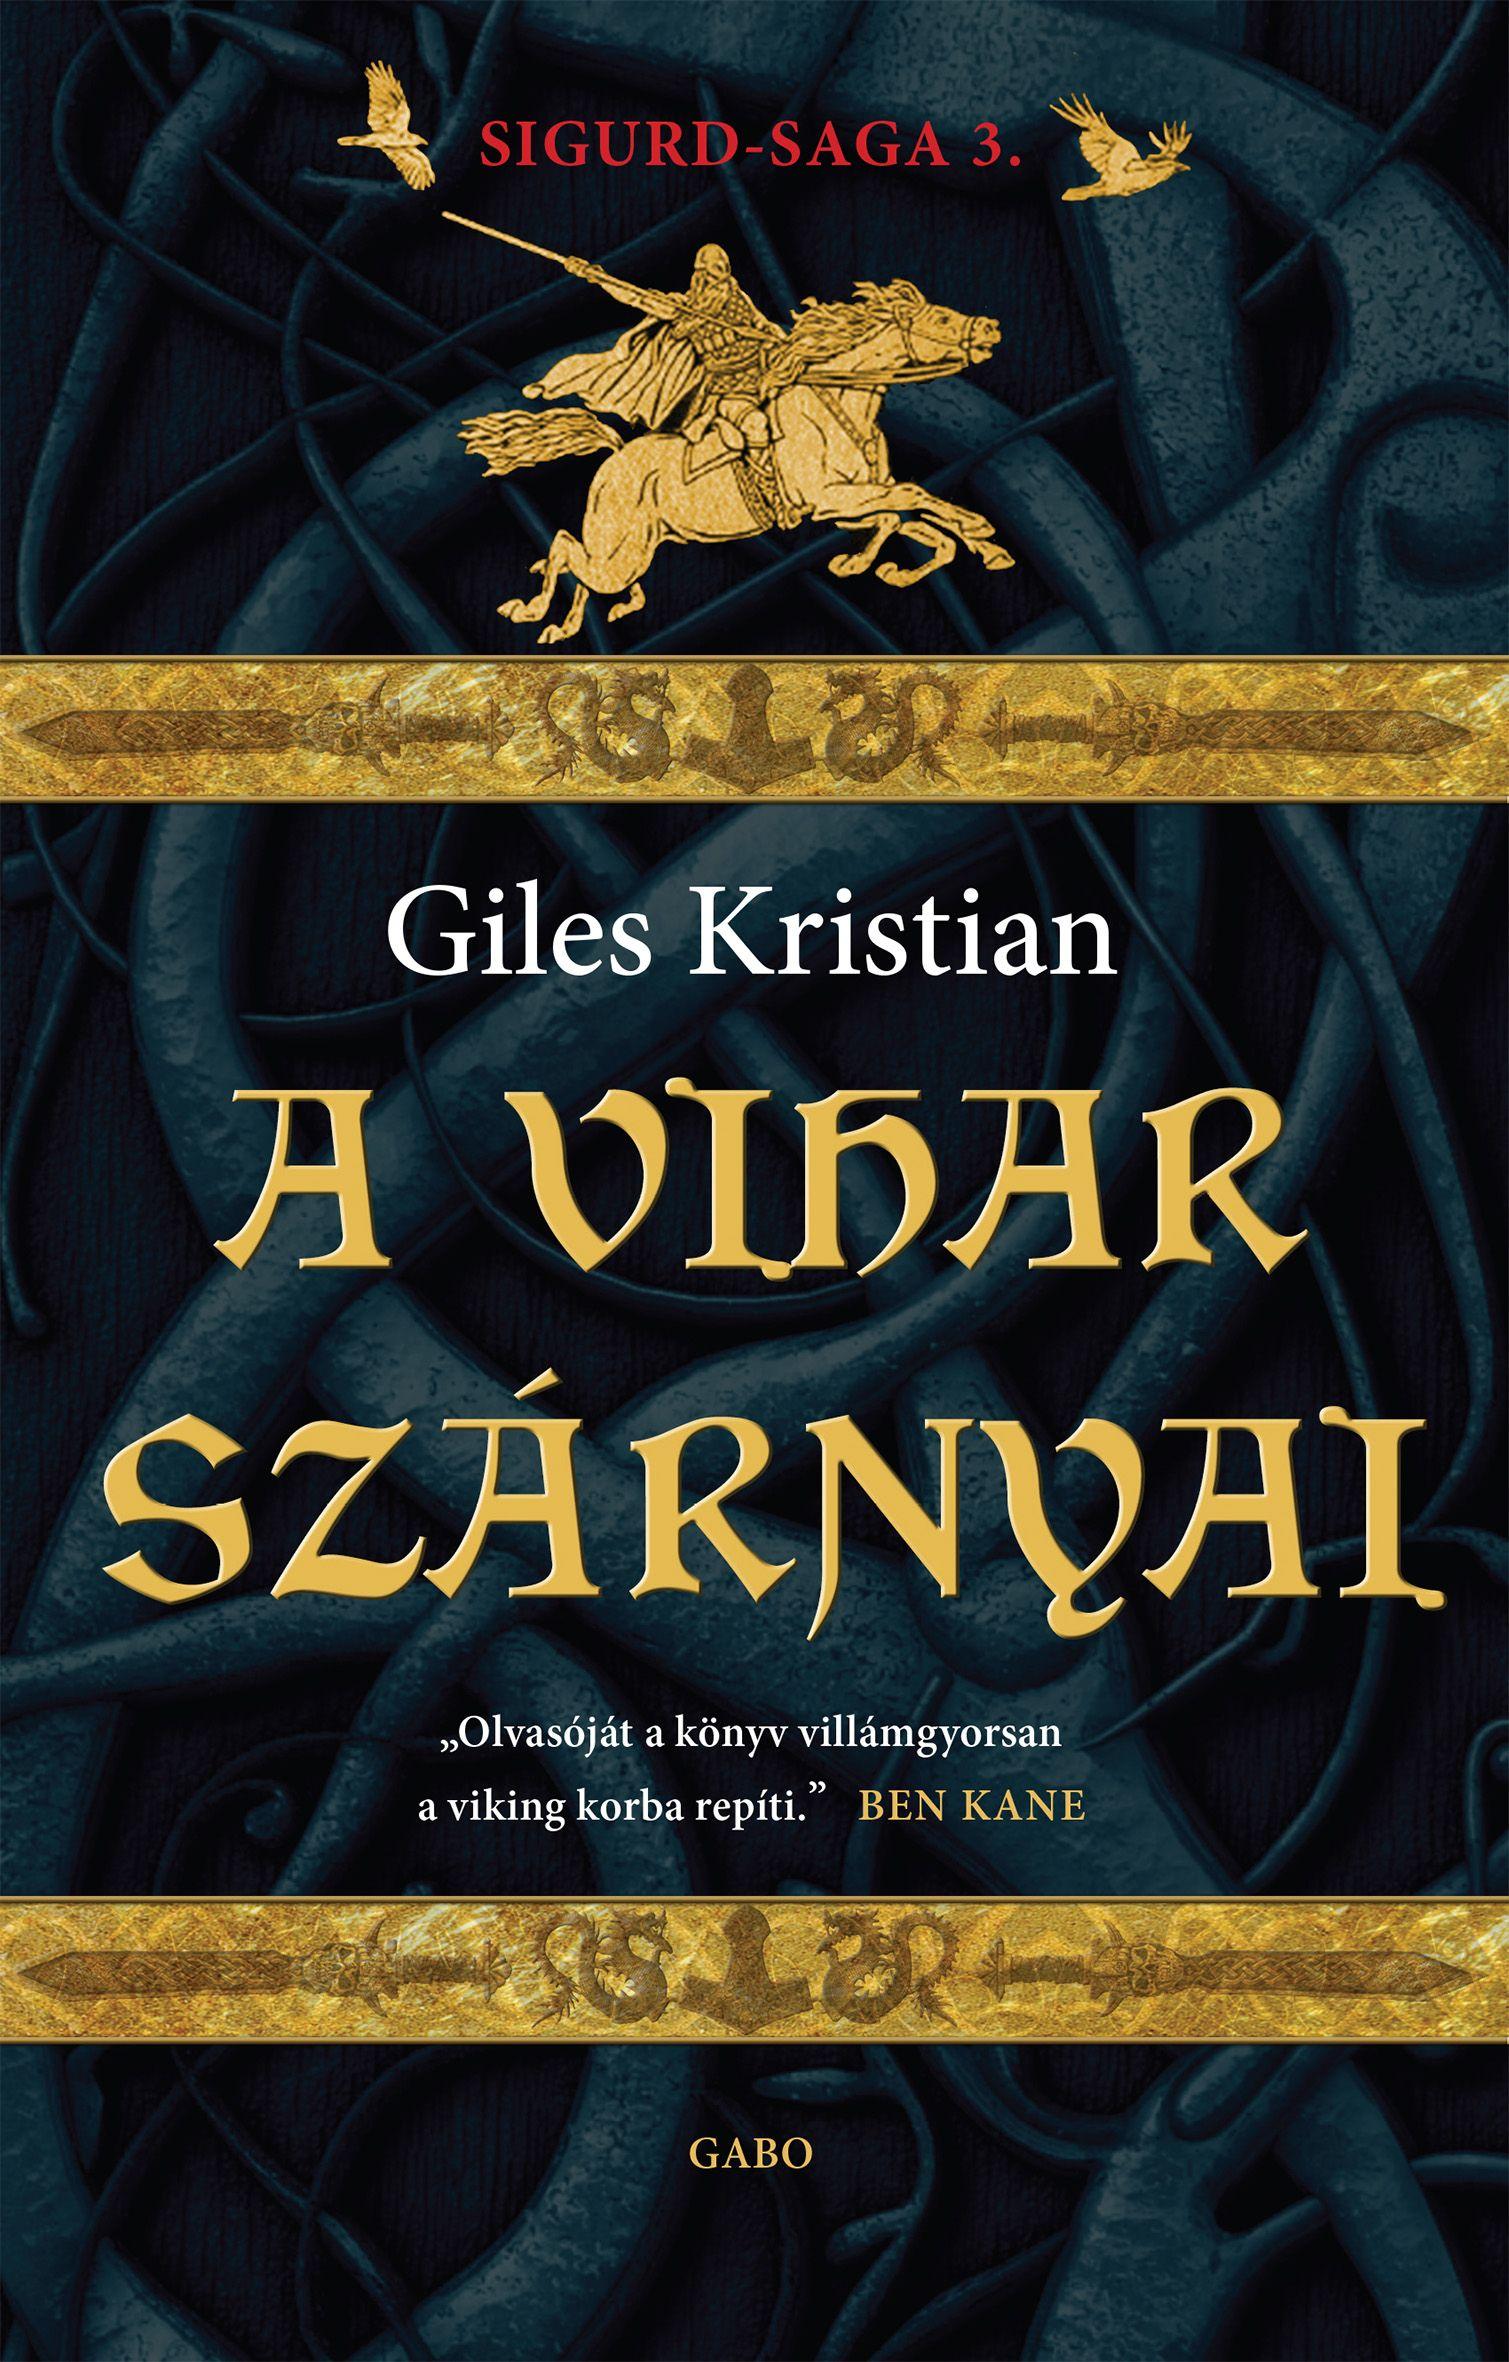 Giles Kristian - A vihar szárnyai. Sigurd-saga 3.